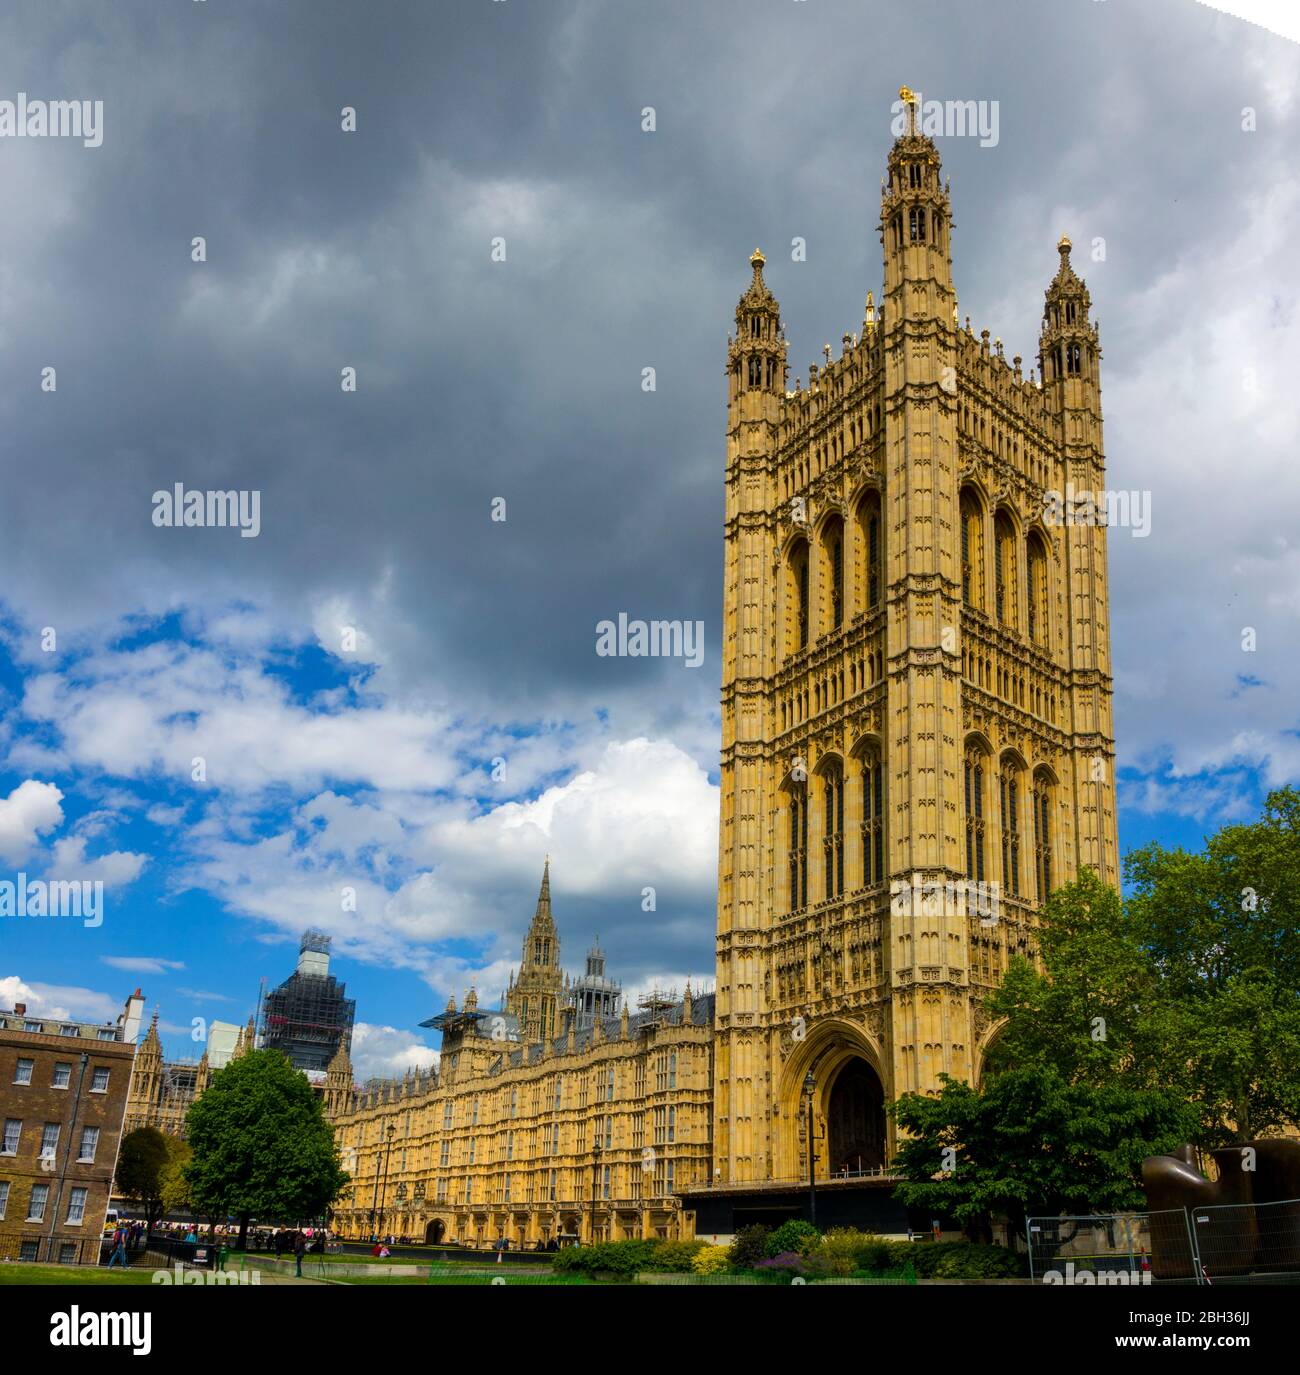 Parliament House London England United Kingdom Capital River Thames UK Europe EU Stock Photo